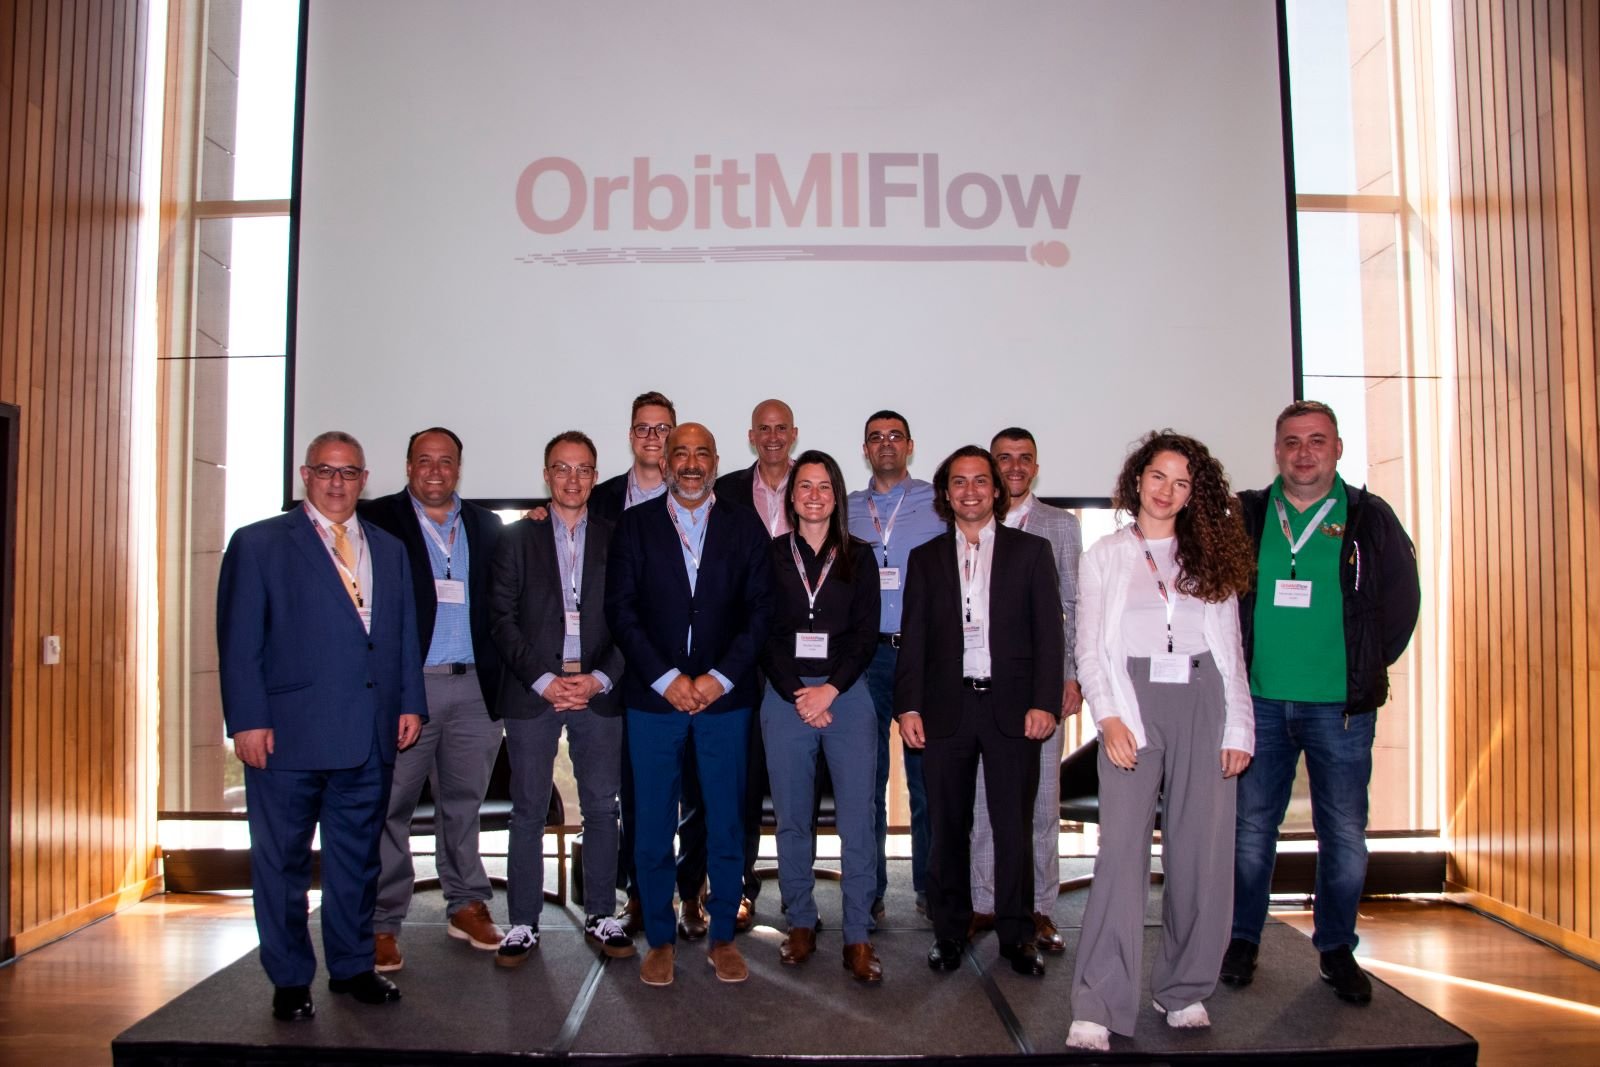 OrbitMI team at FLOW @ashleydartphoto